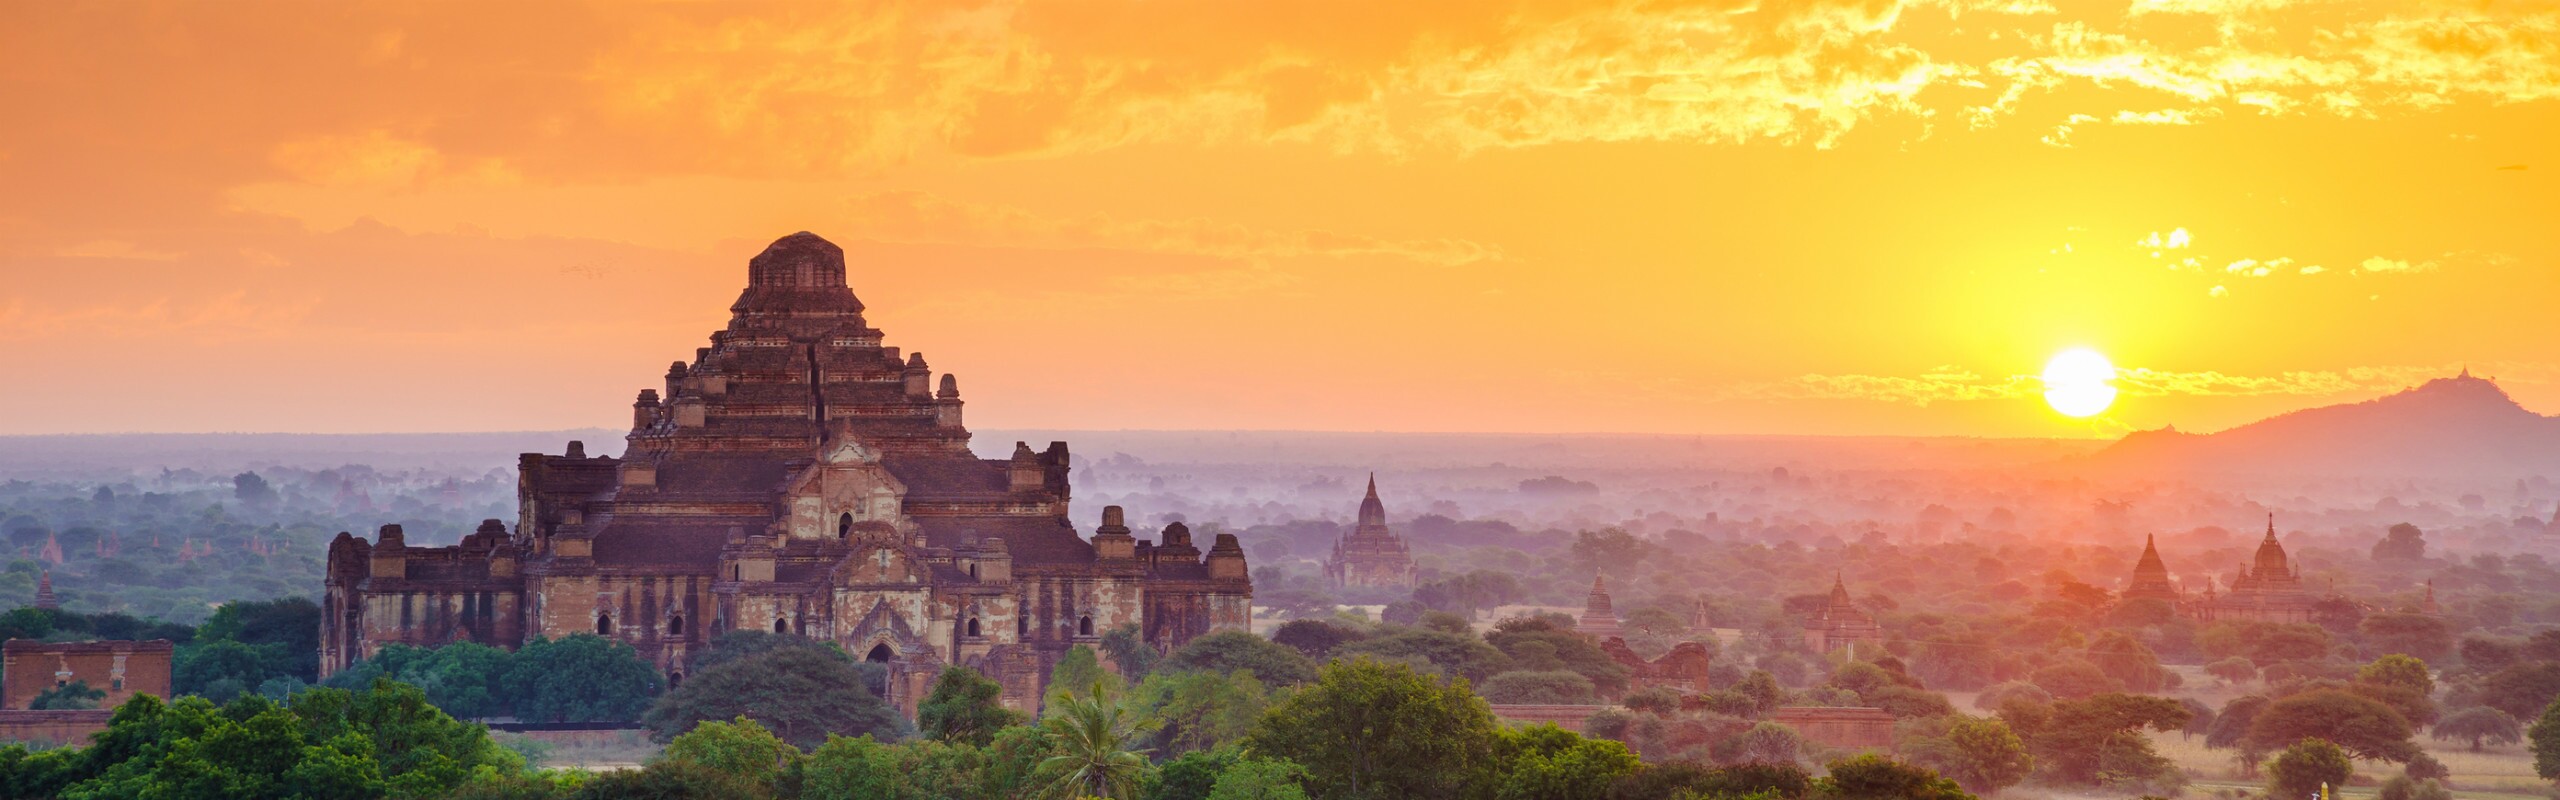 Traveling from Mandalay to Bagan - Take a River Cruise